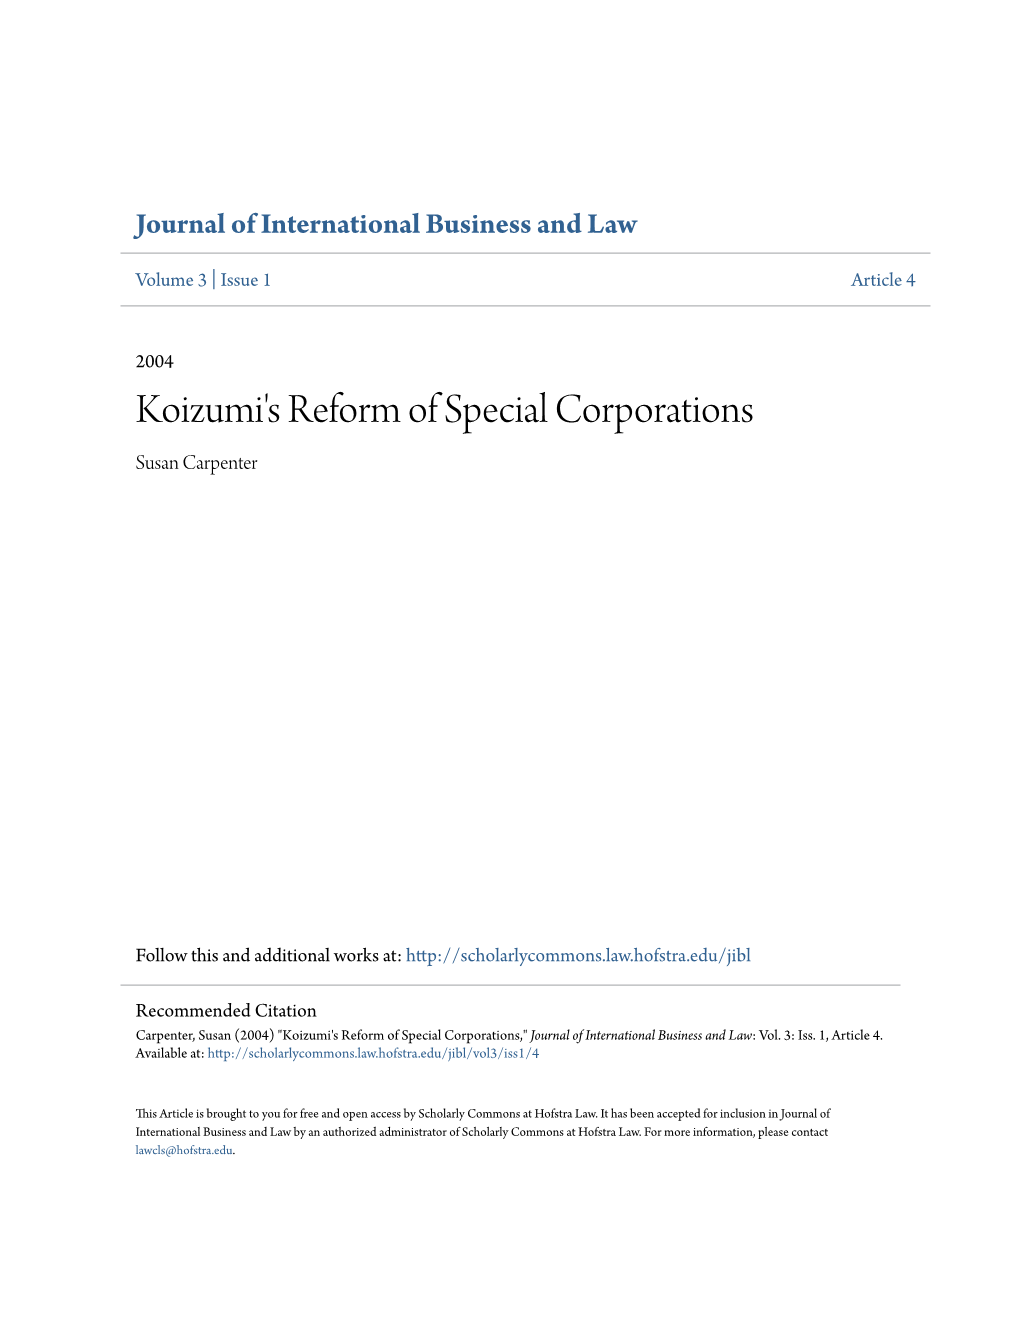 Koizumi's Reform of Special Corporations Susan Carpenter